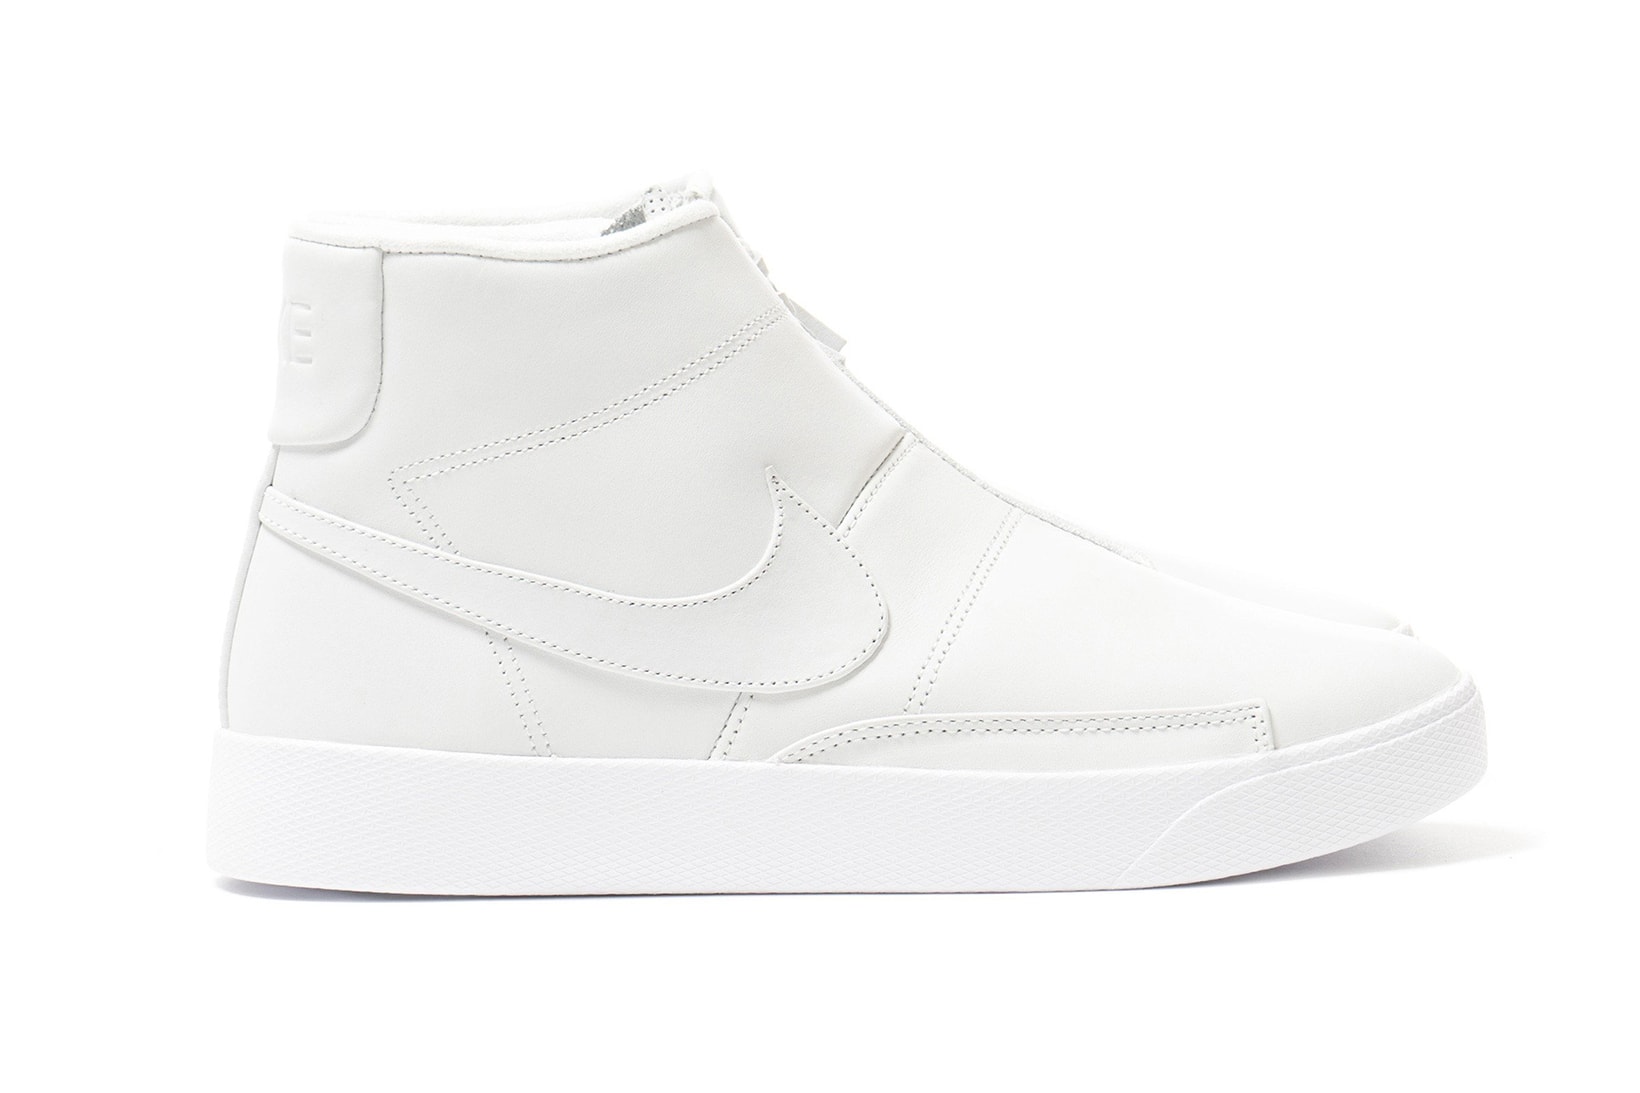 NikeLab Blazer Advanced in White Sneaker